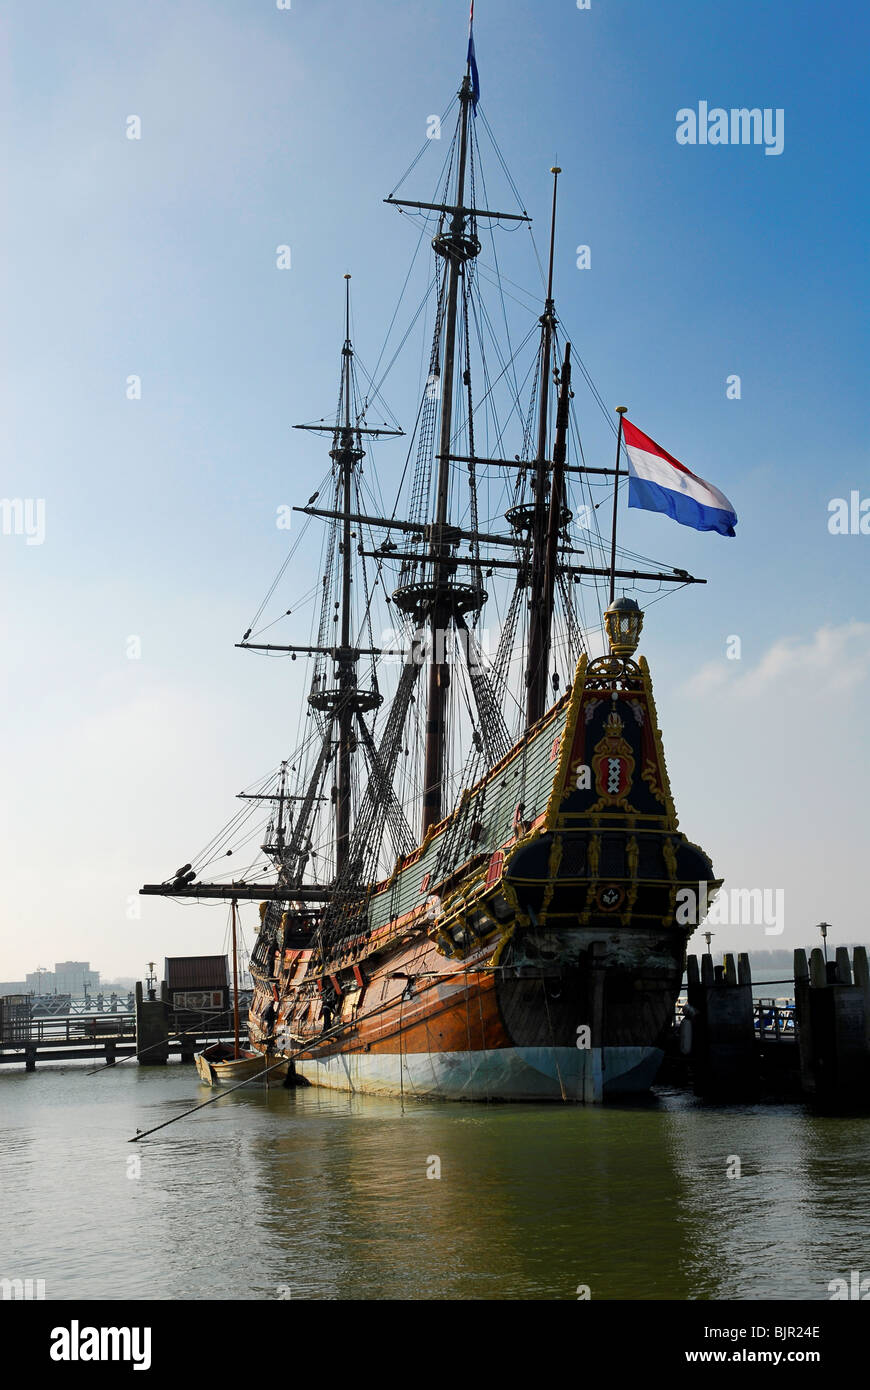 old ship Batavia  in the harbor, Lelystad The Netherlands Stock Photo